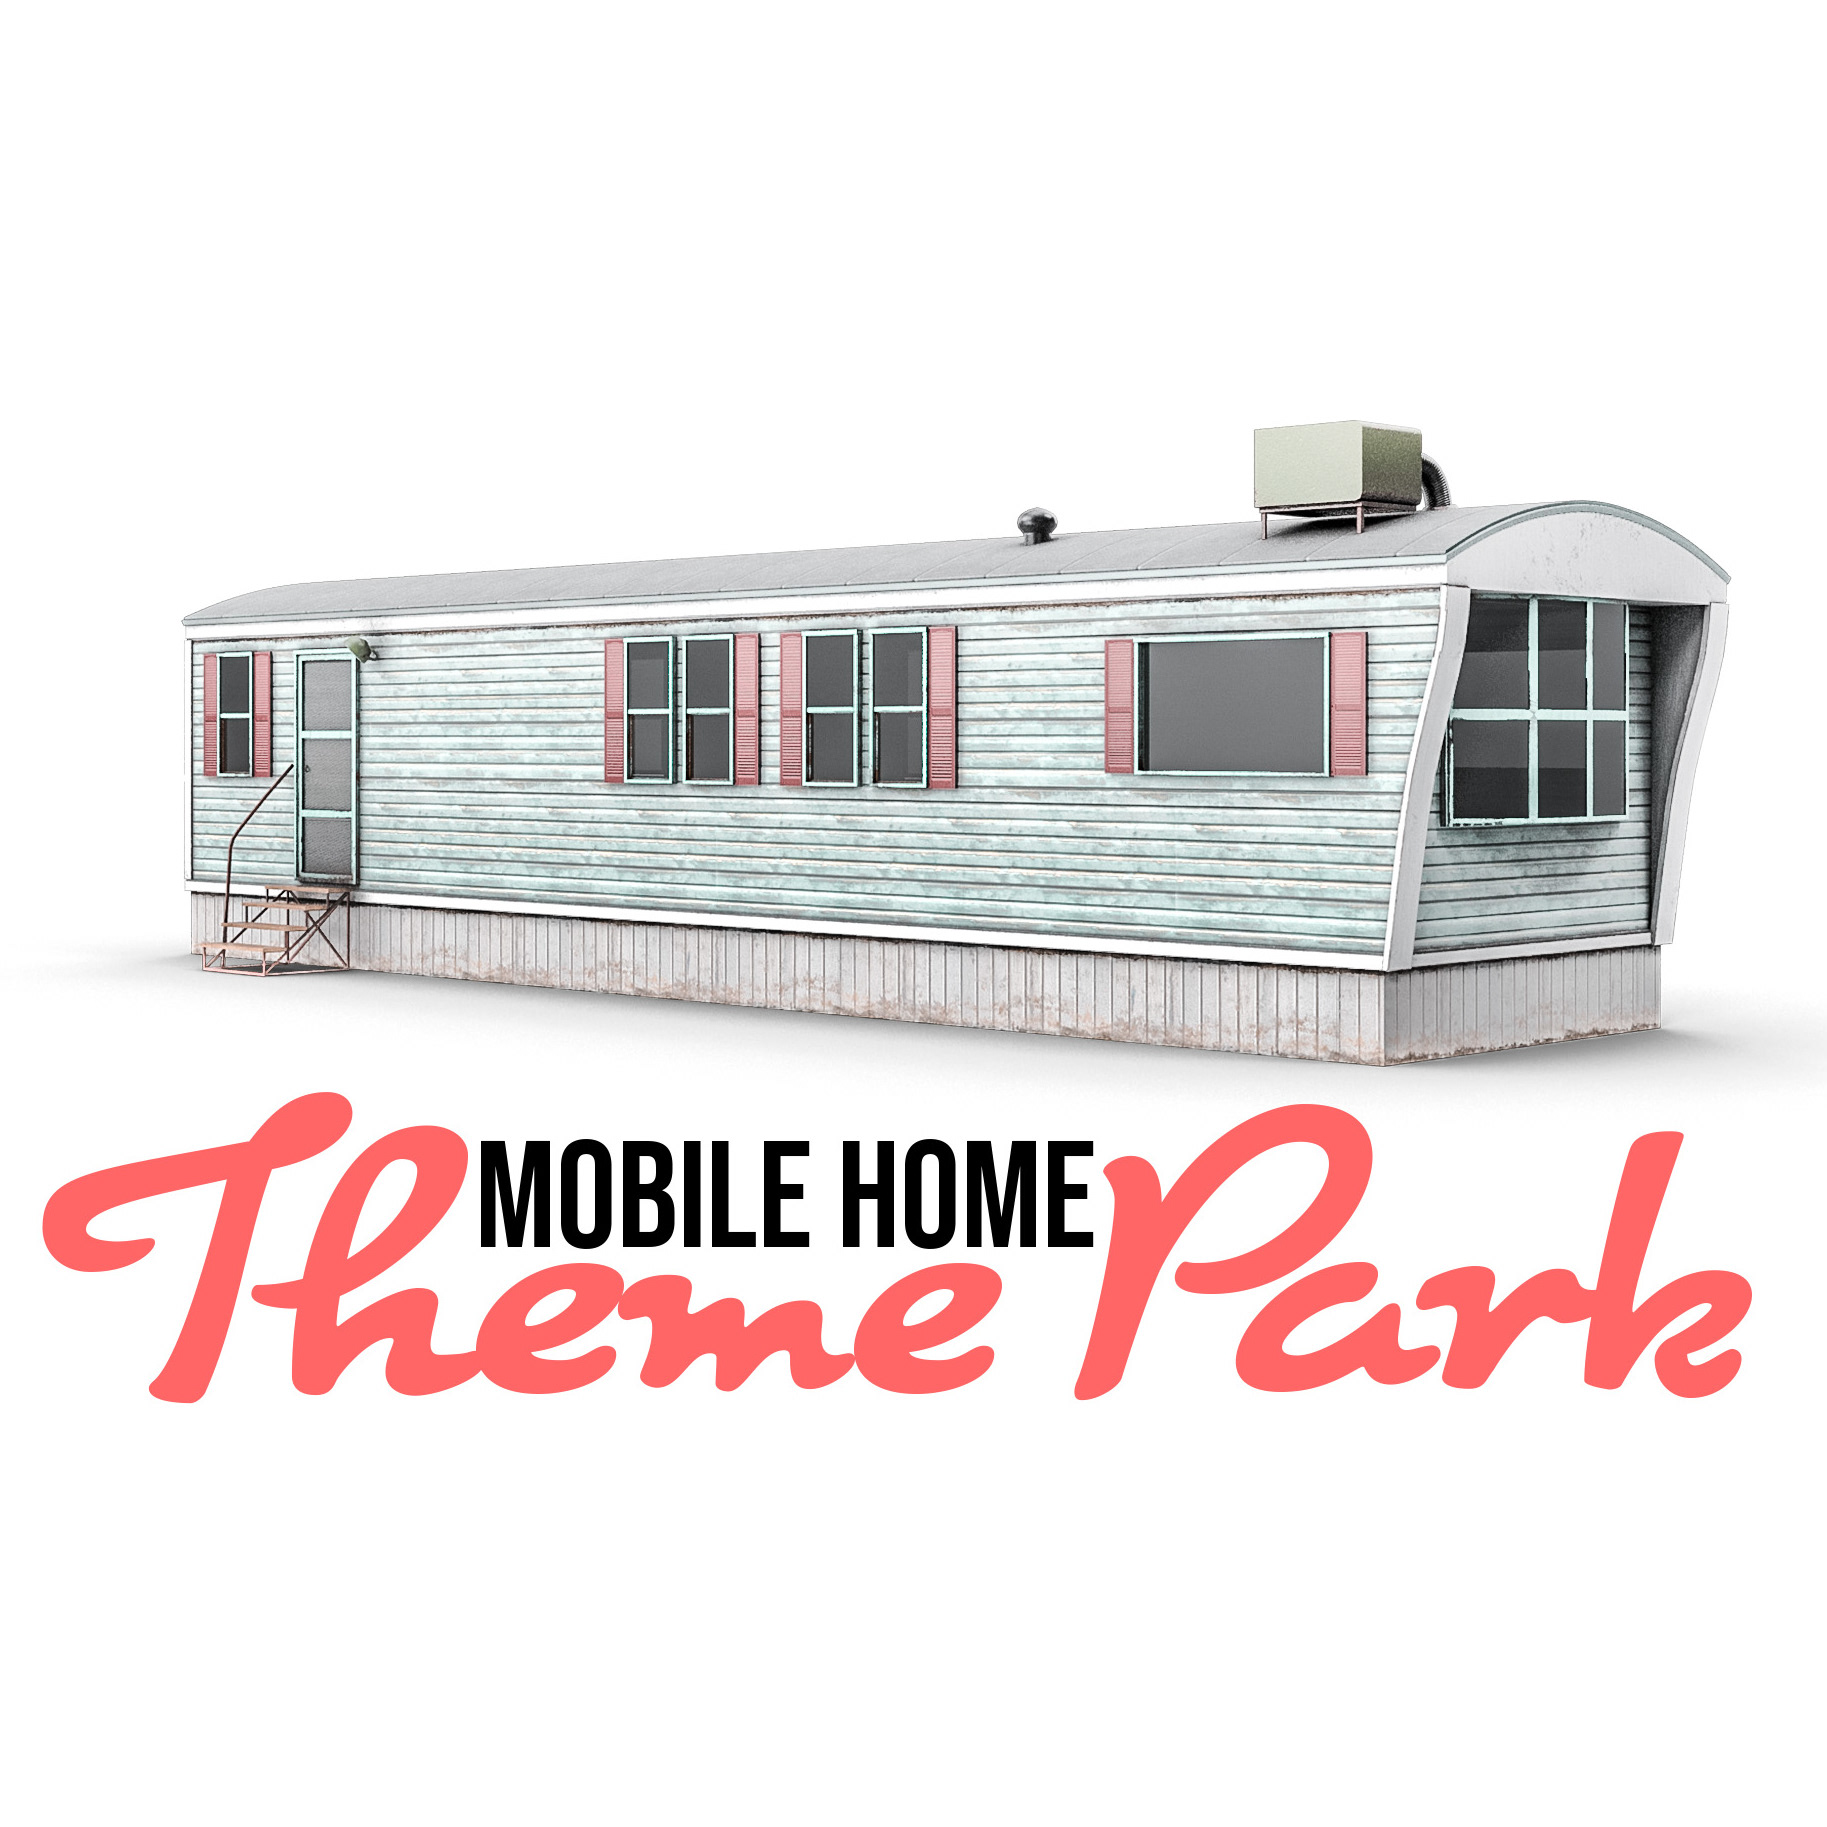 Mobile Home Theme Park